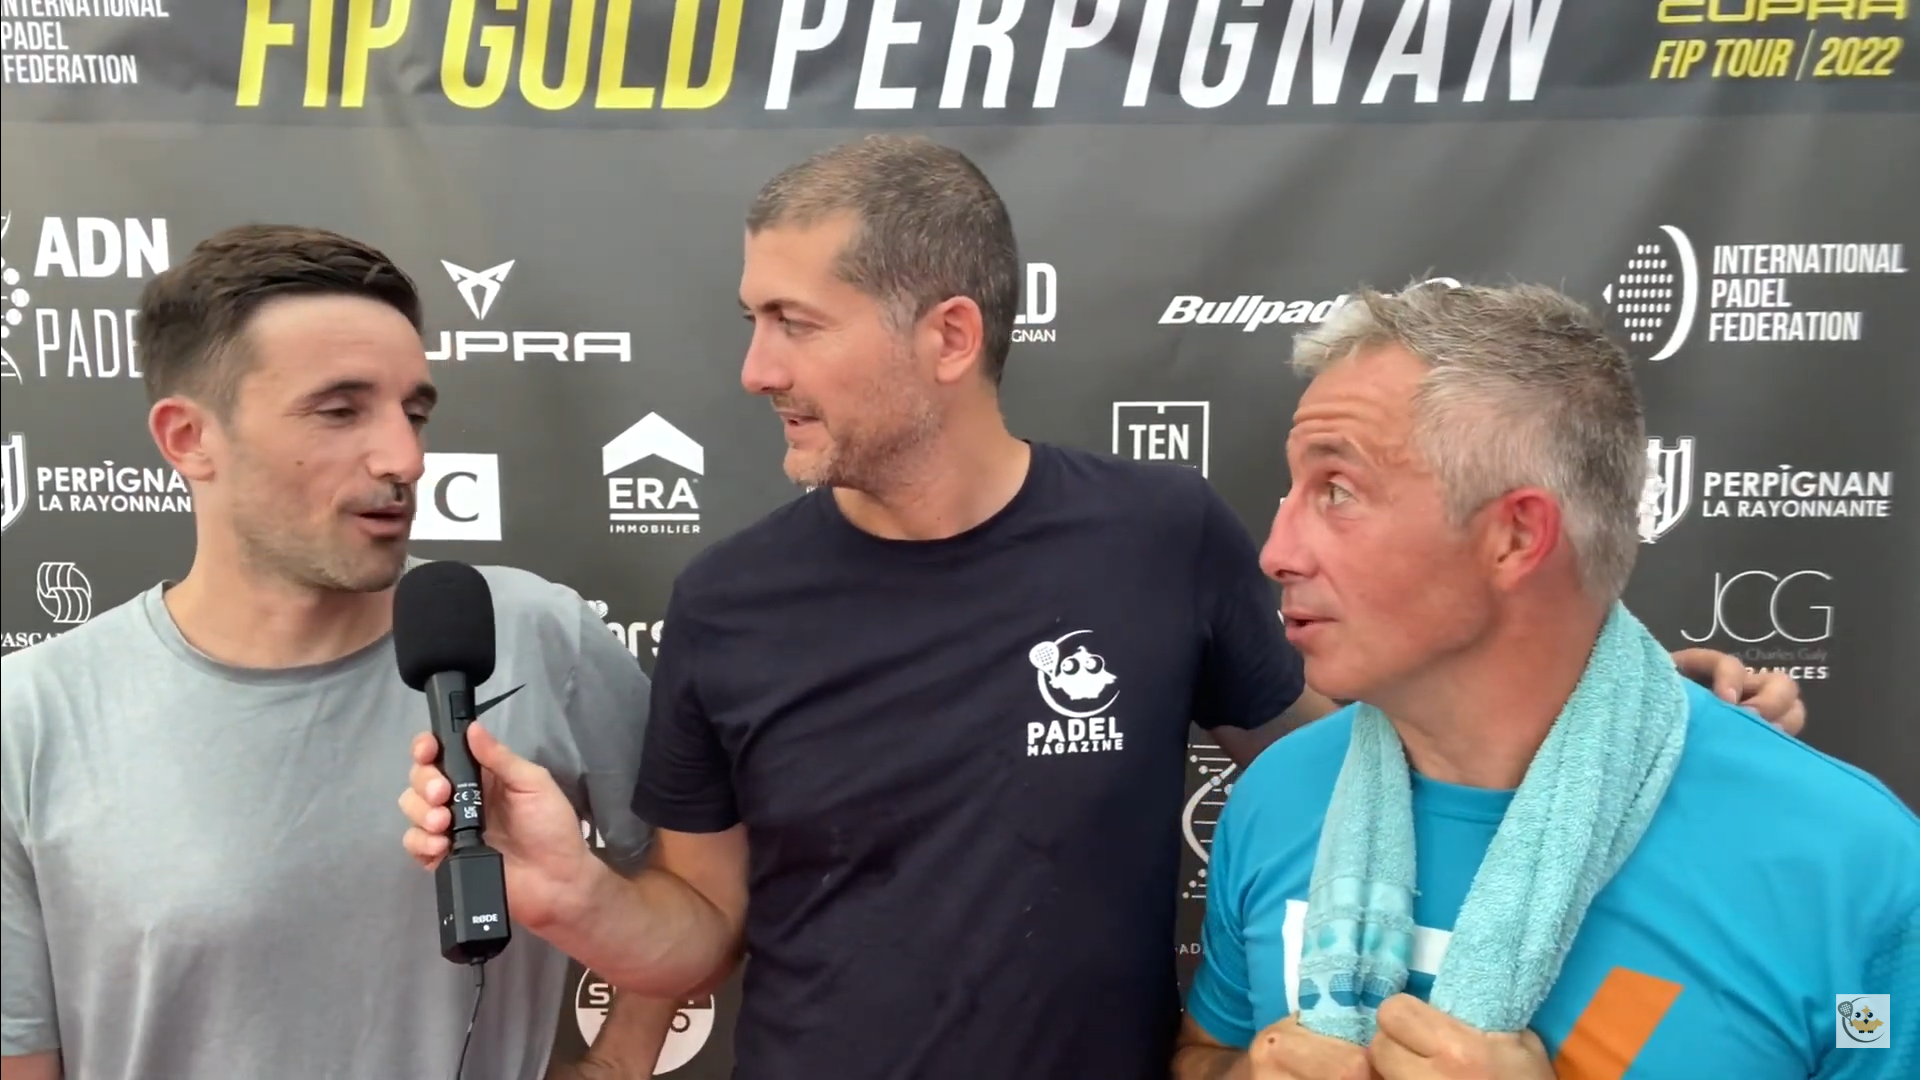 JP Pellicer og Dominique Campana Fip Gold Perpignan ITW